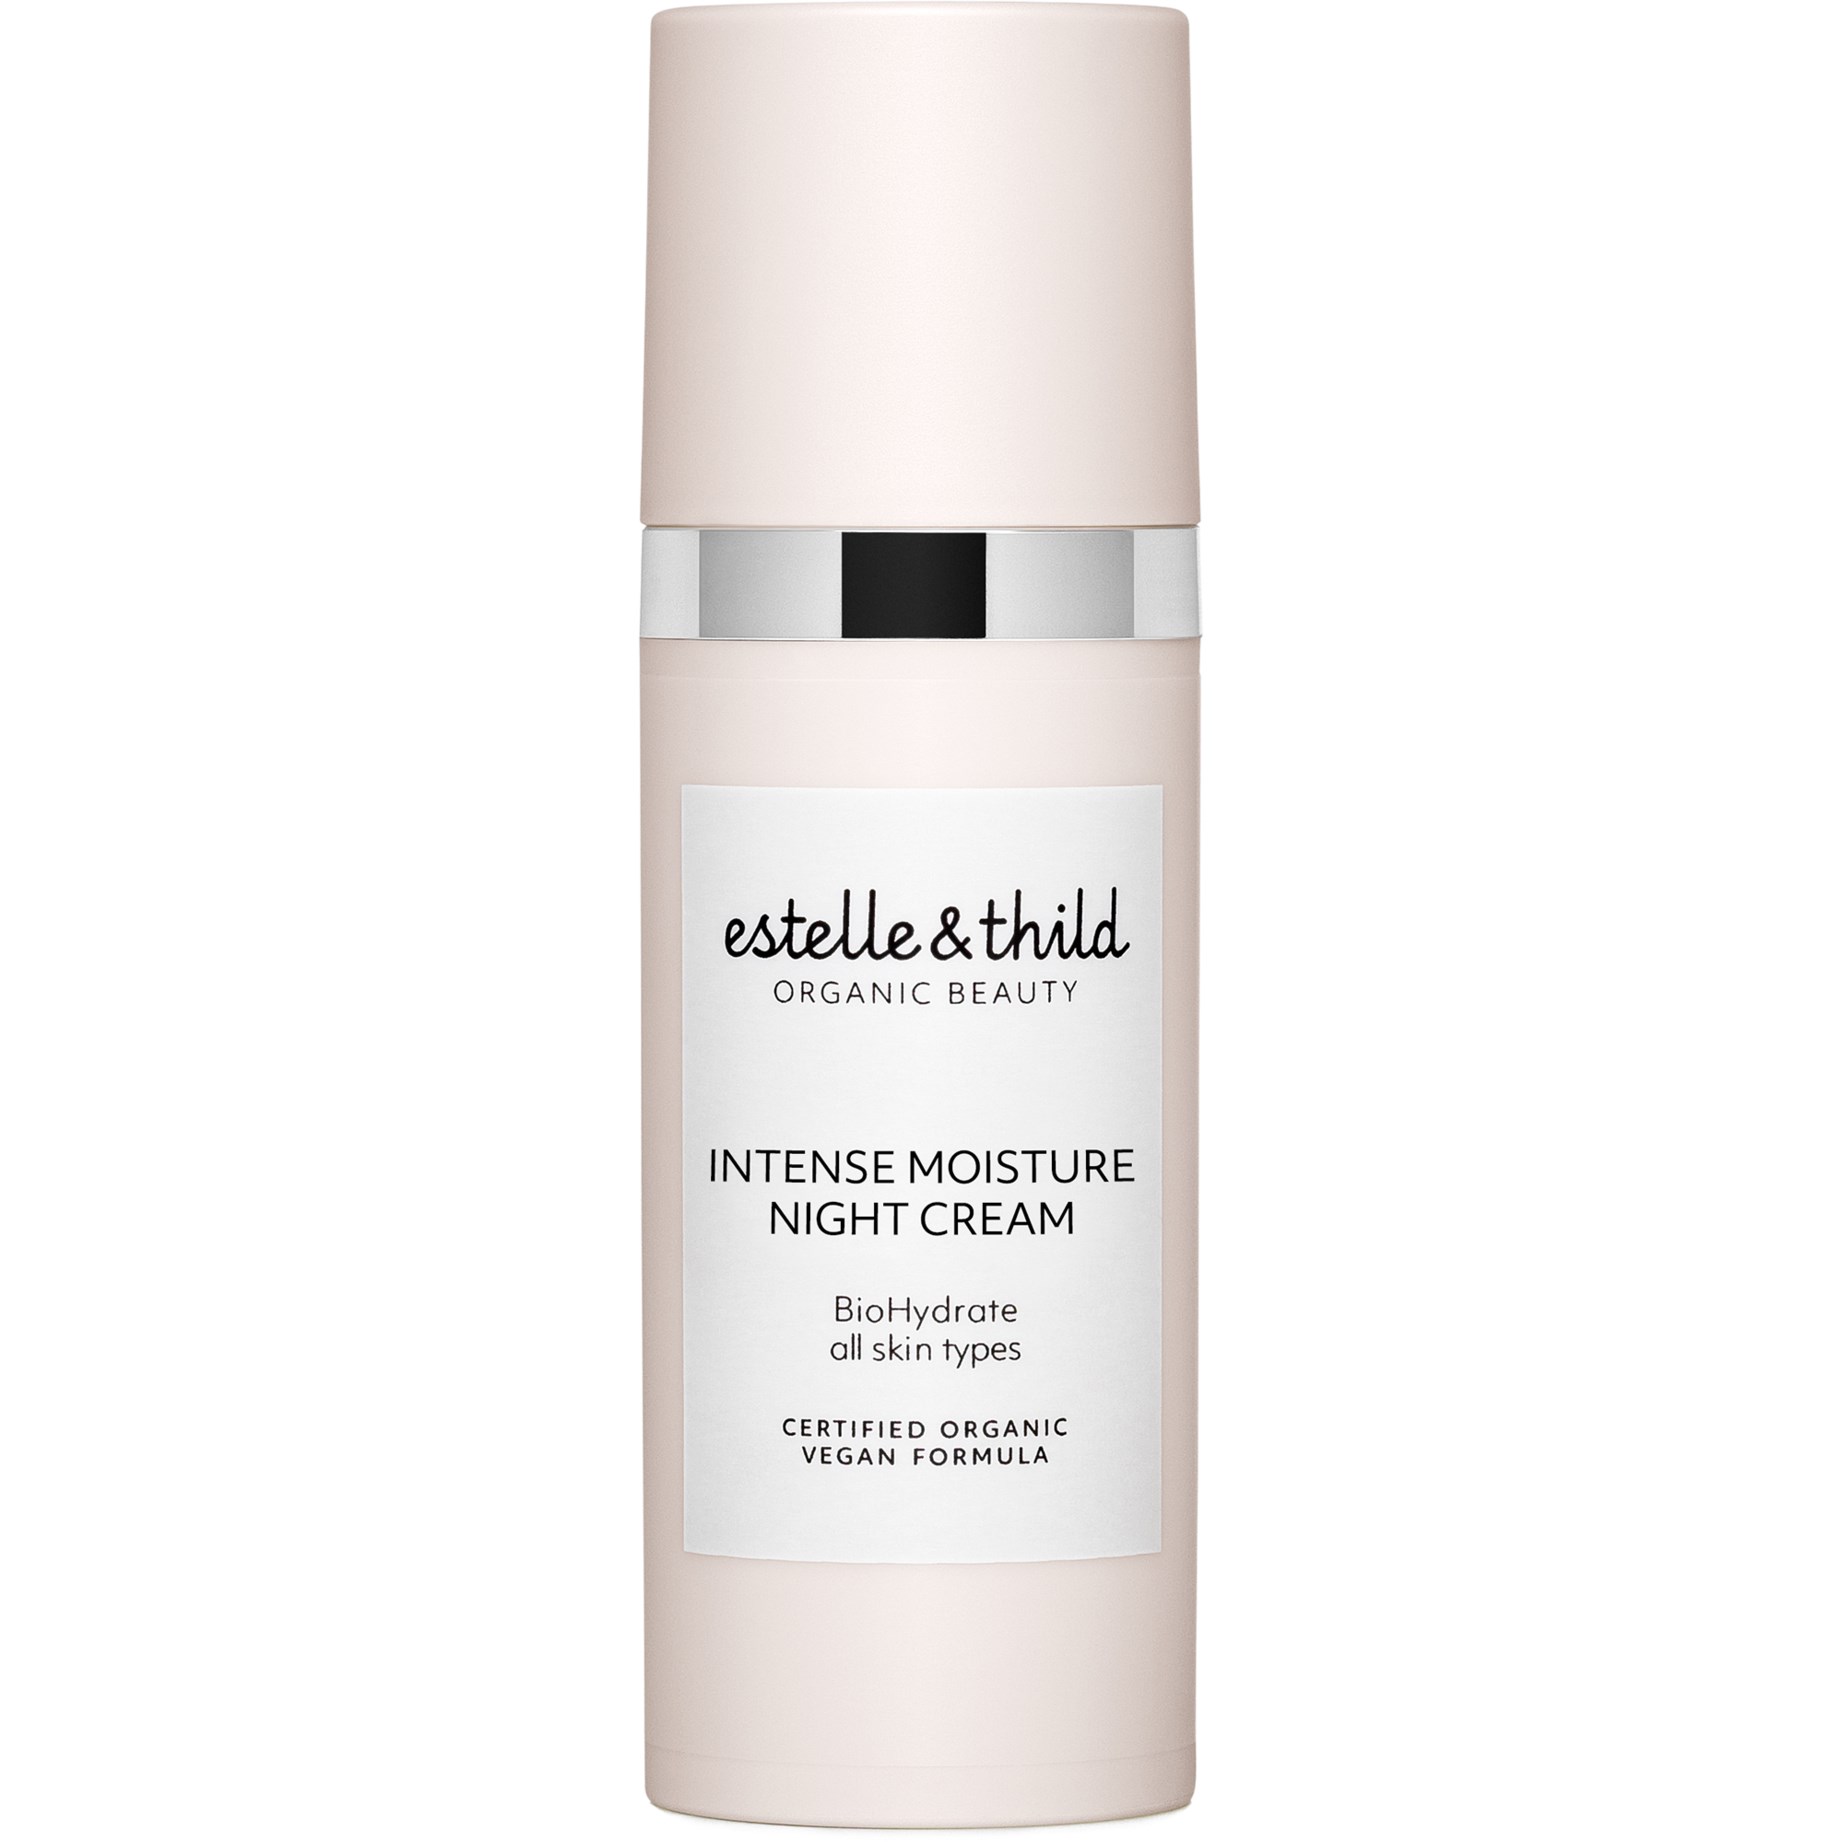 Estelle & Thild BioHydrate Intense Moisture Night Cream 50 ml